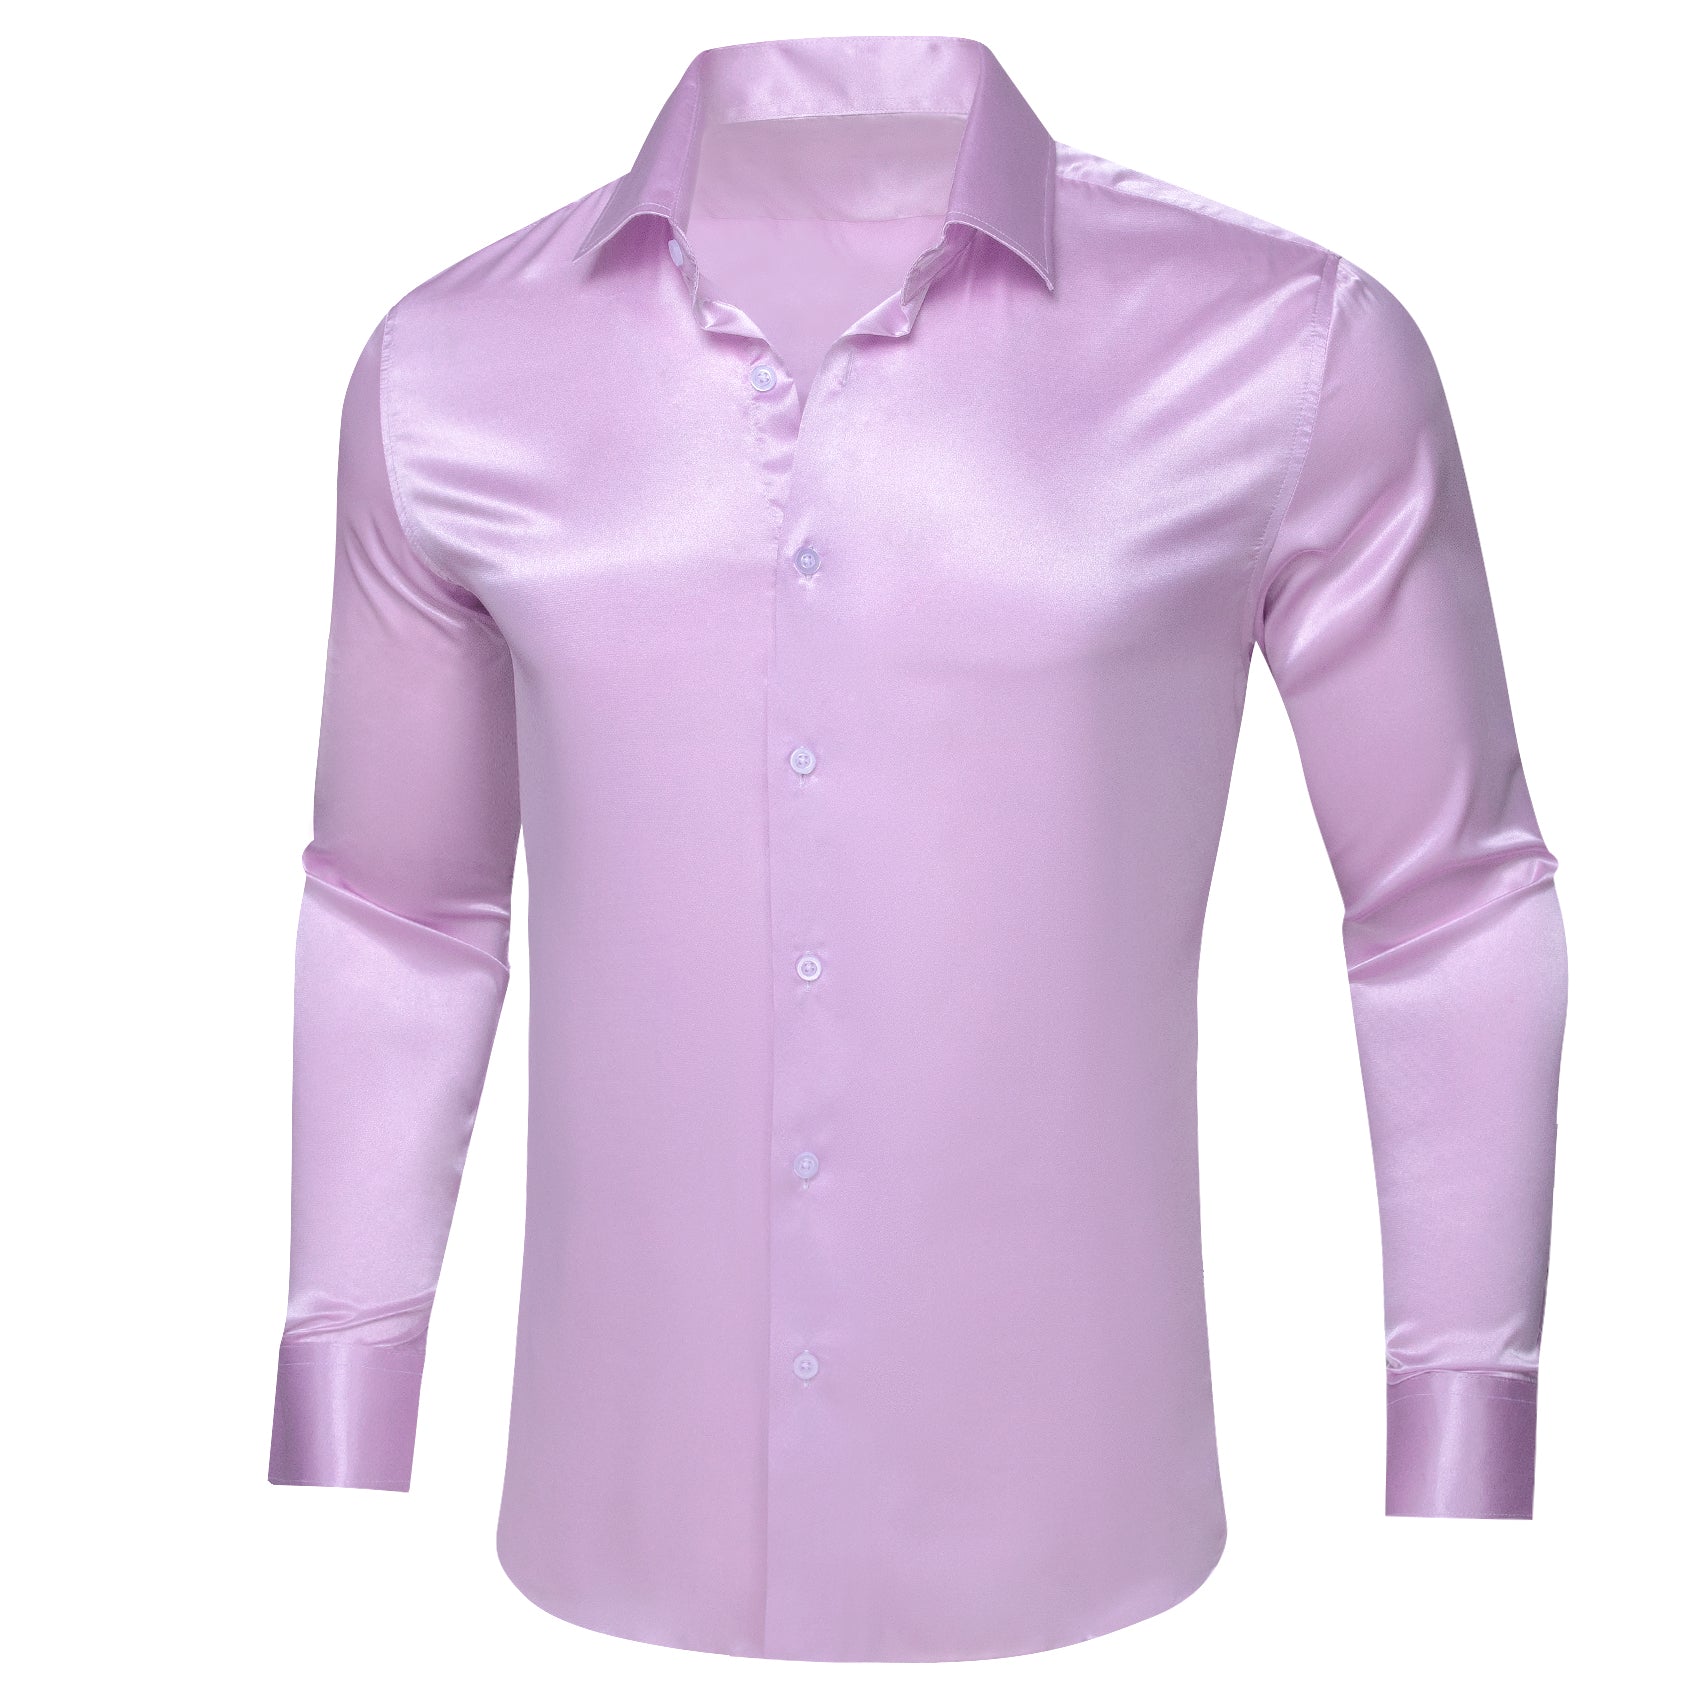 Barry.wang Purple Solid Silk Shirt